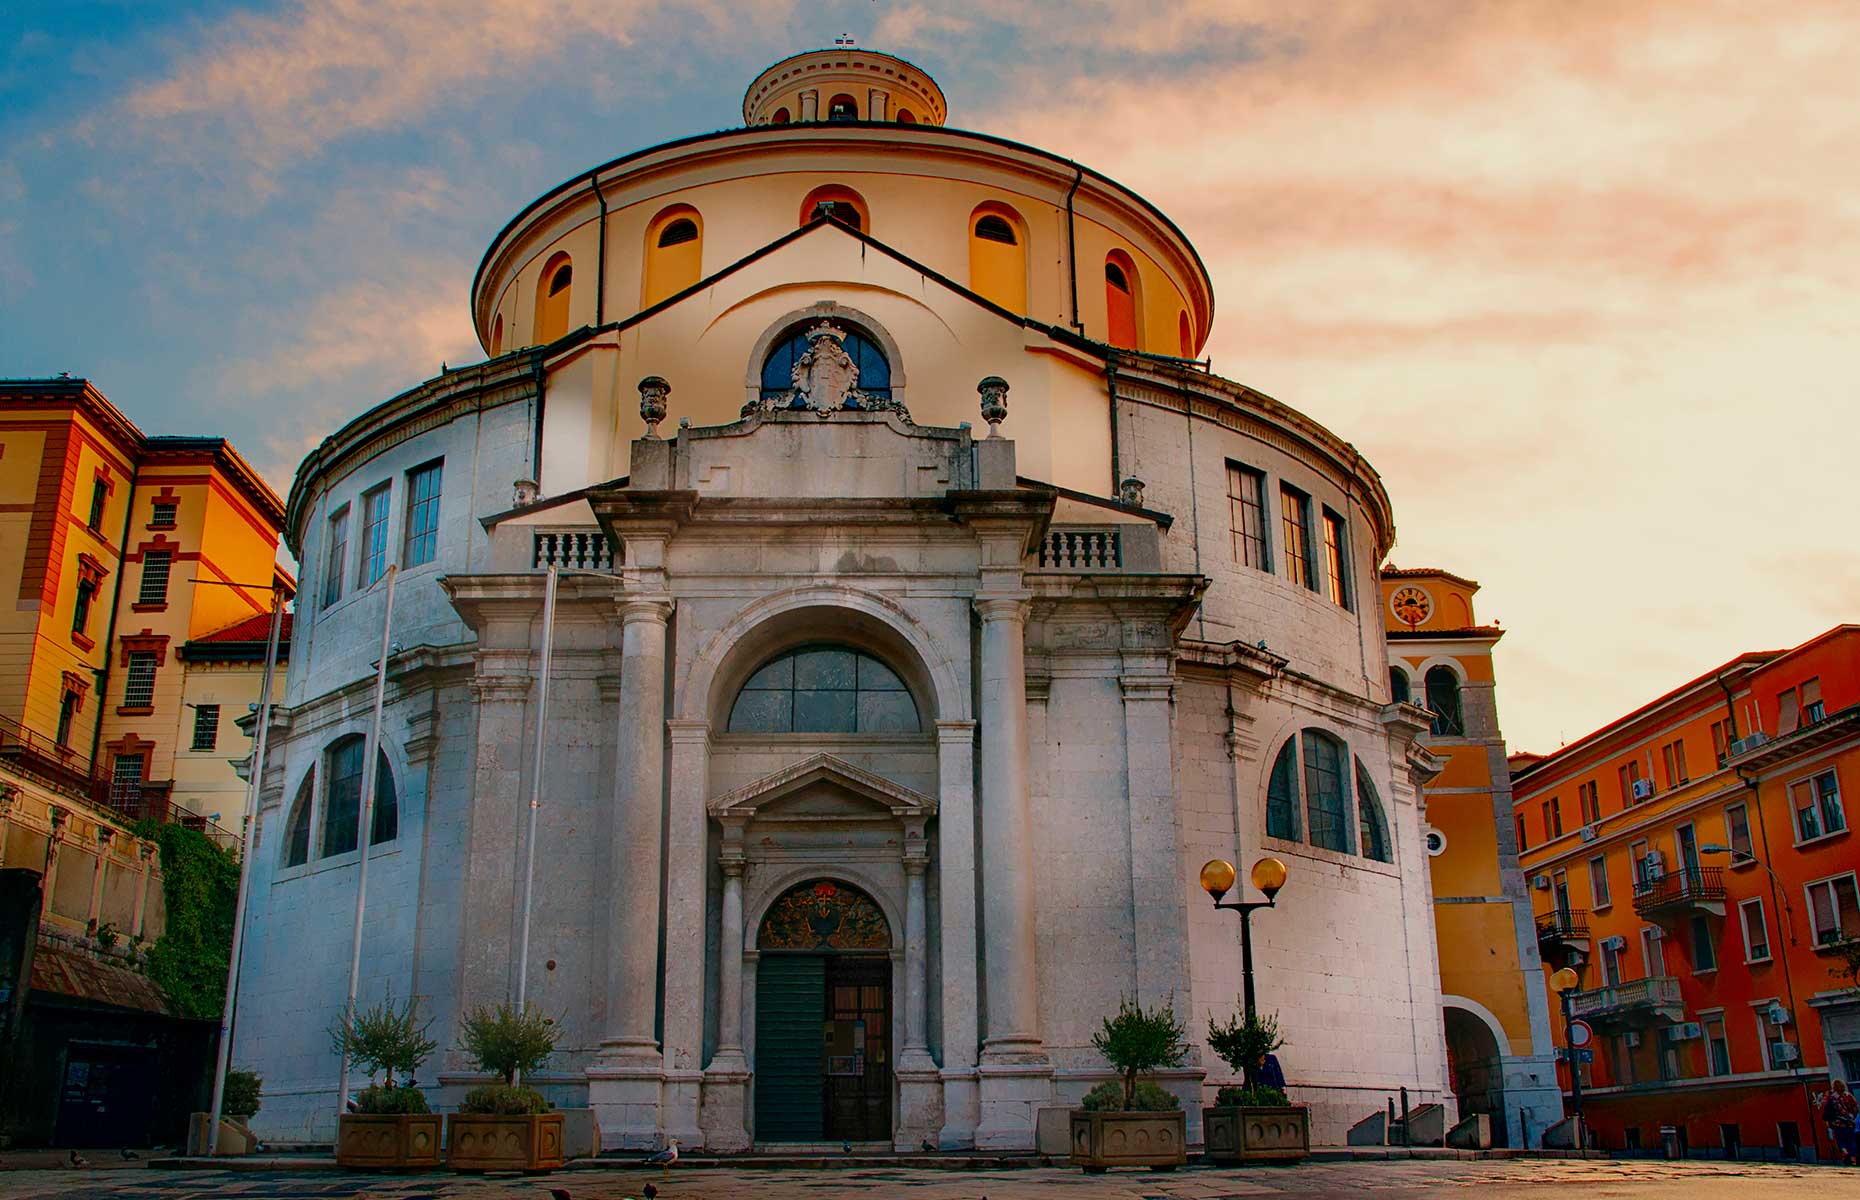 St Vitus Cathedral, Rijeka, Croatia (Image: Maja Tomic/Shutterstock)